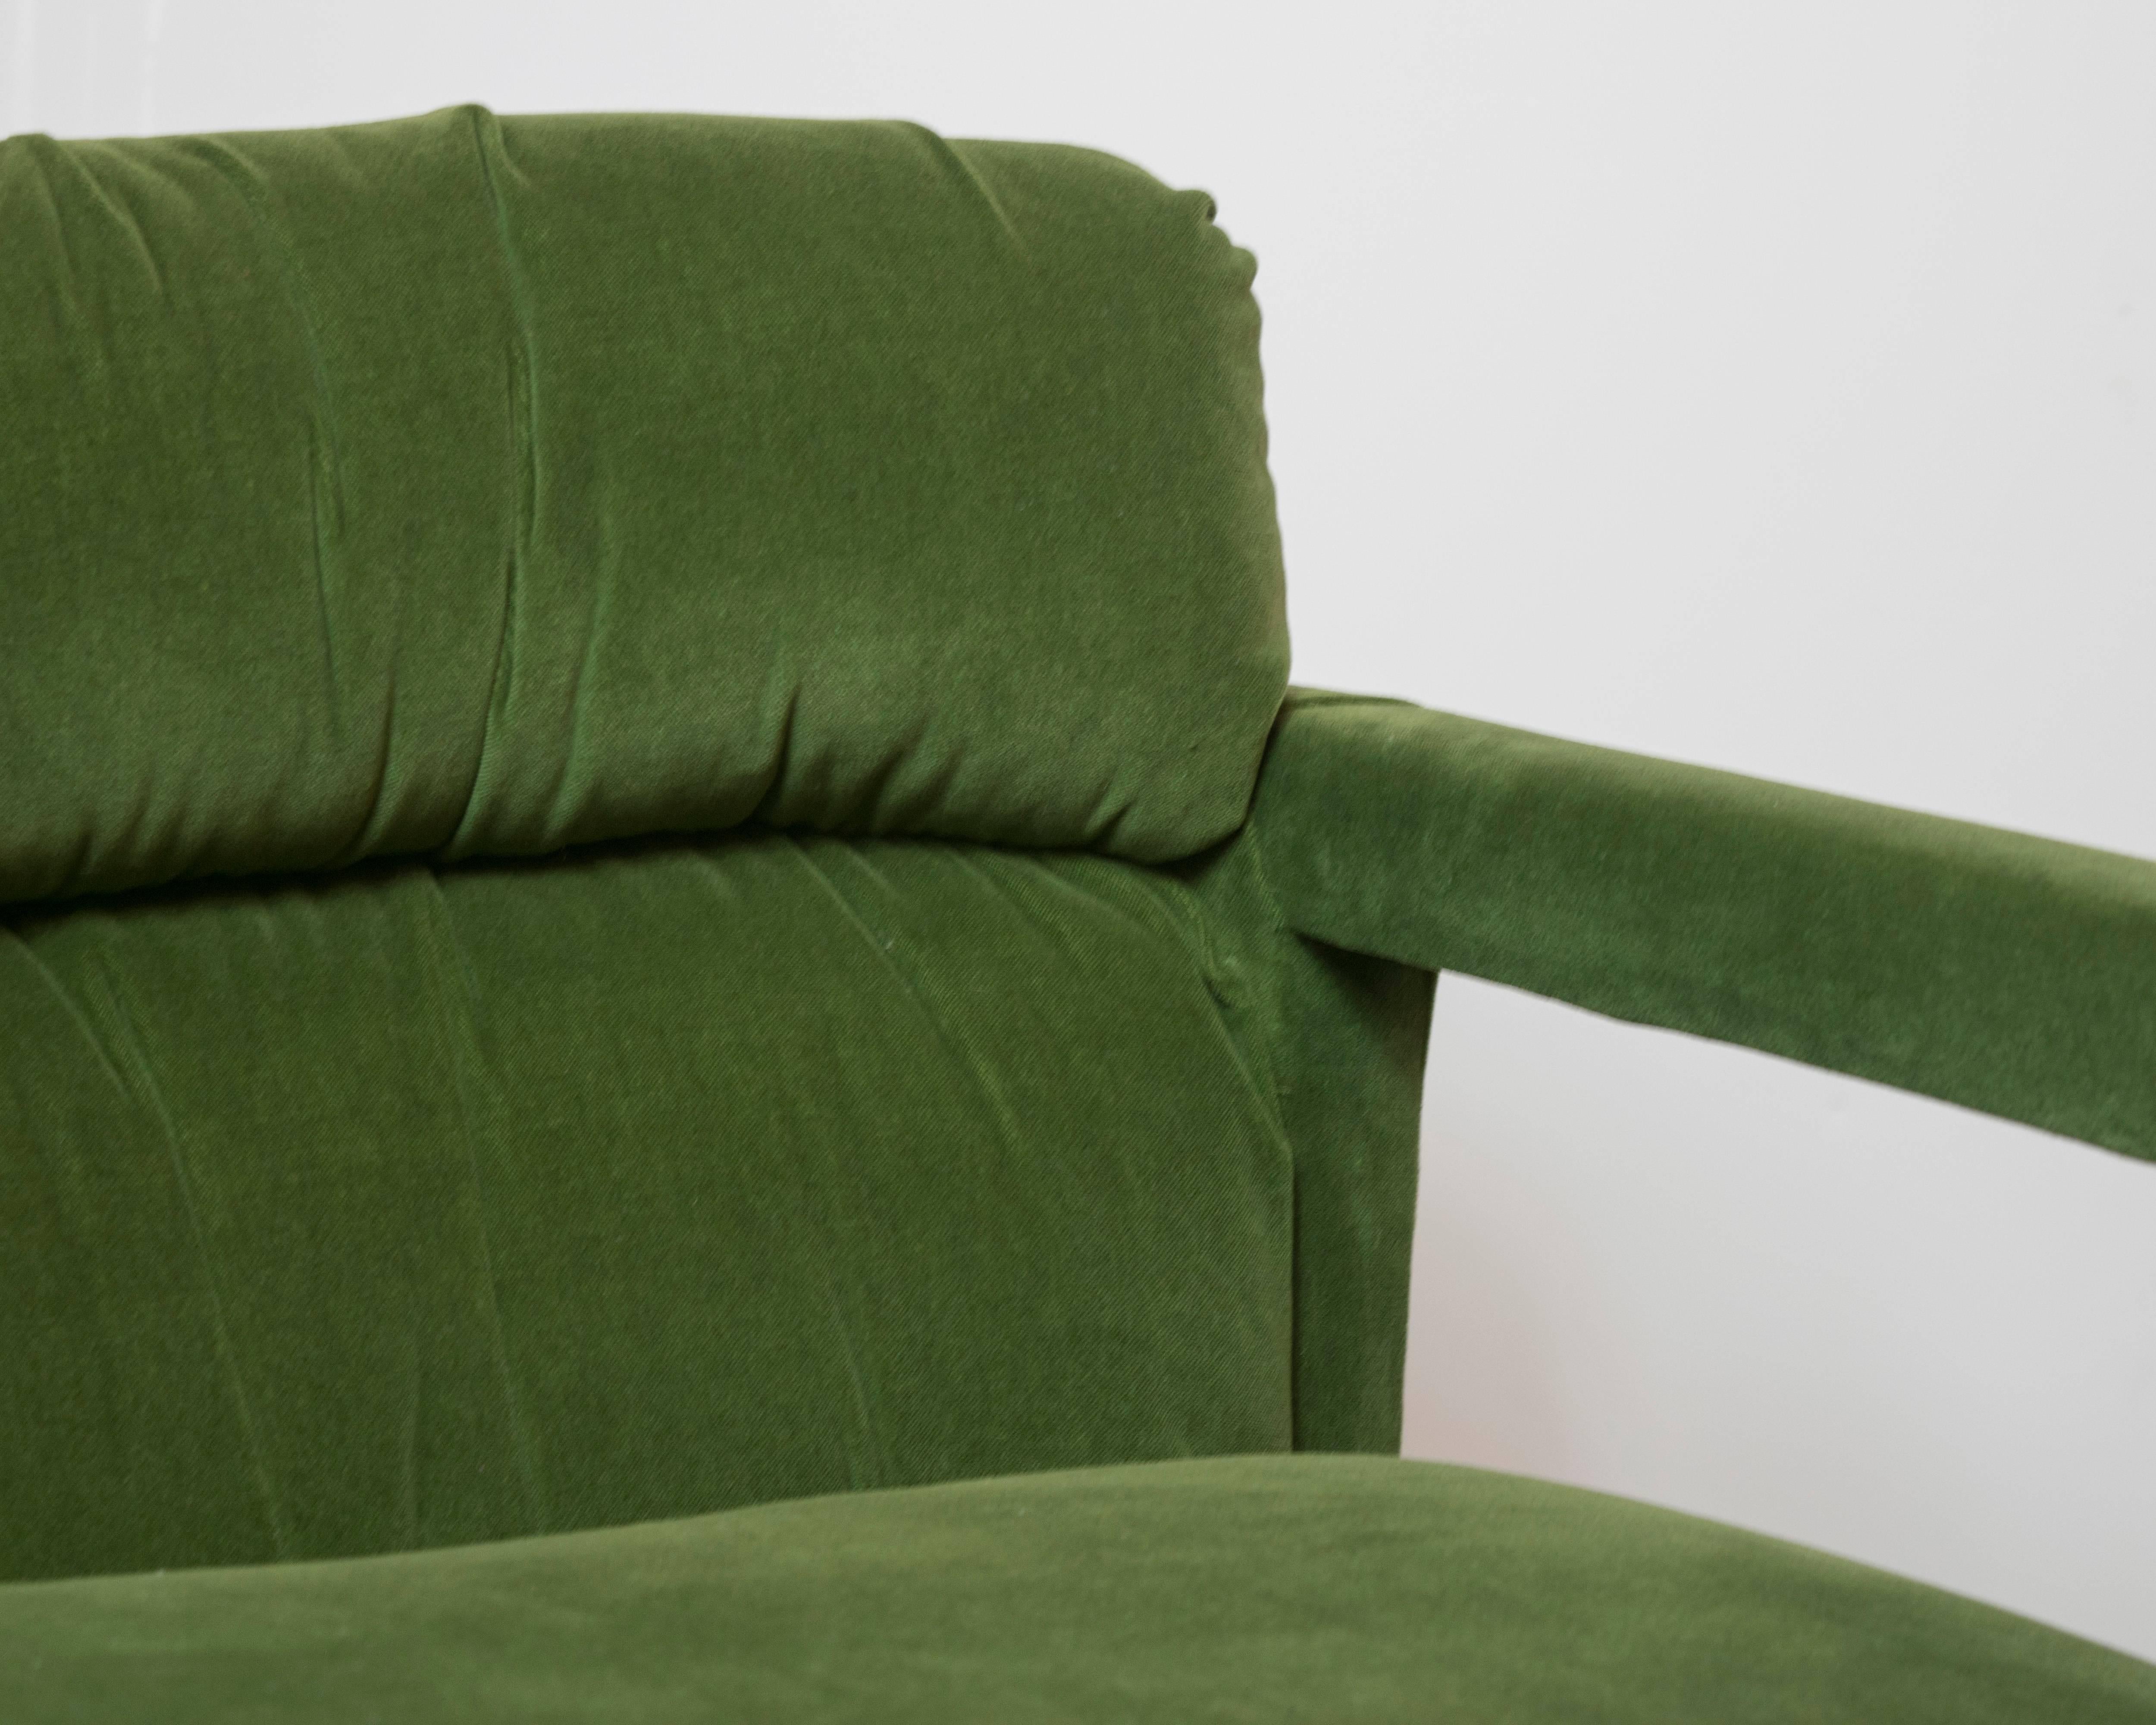 American Pair of Loden Green Velvet Fully Upholstered Chairs by Drexel